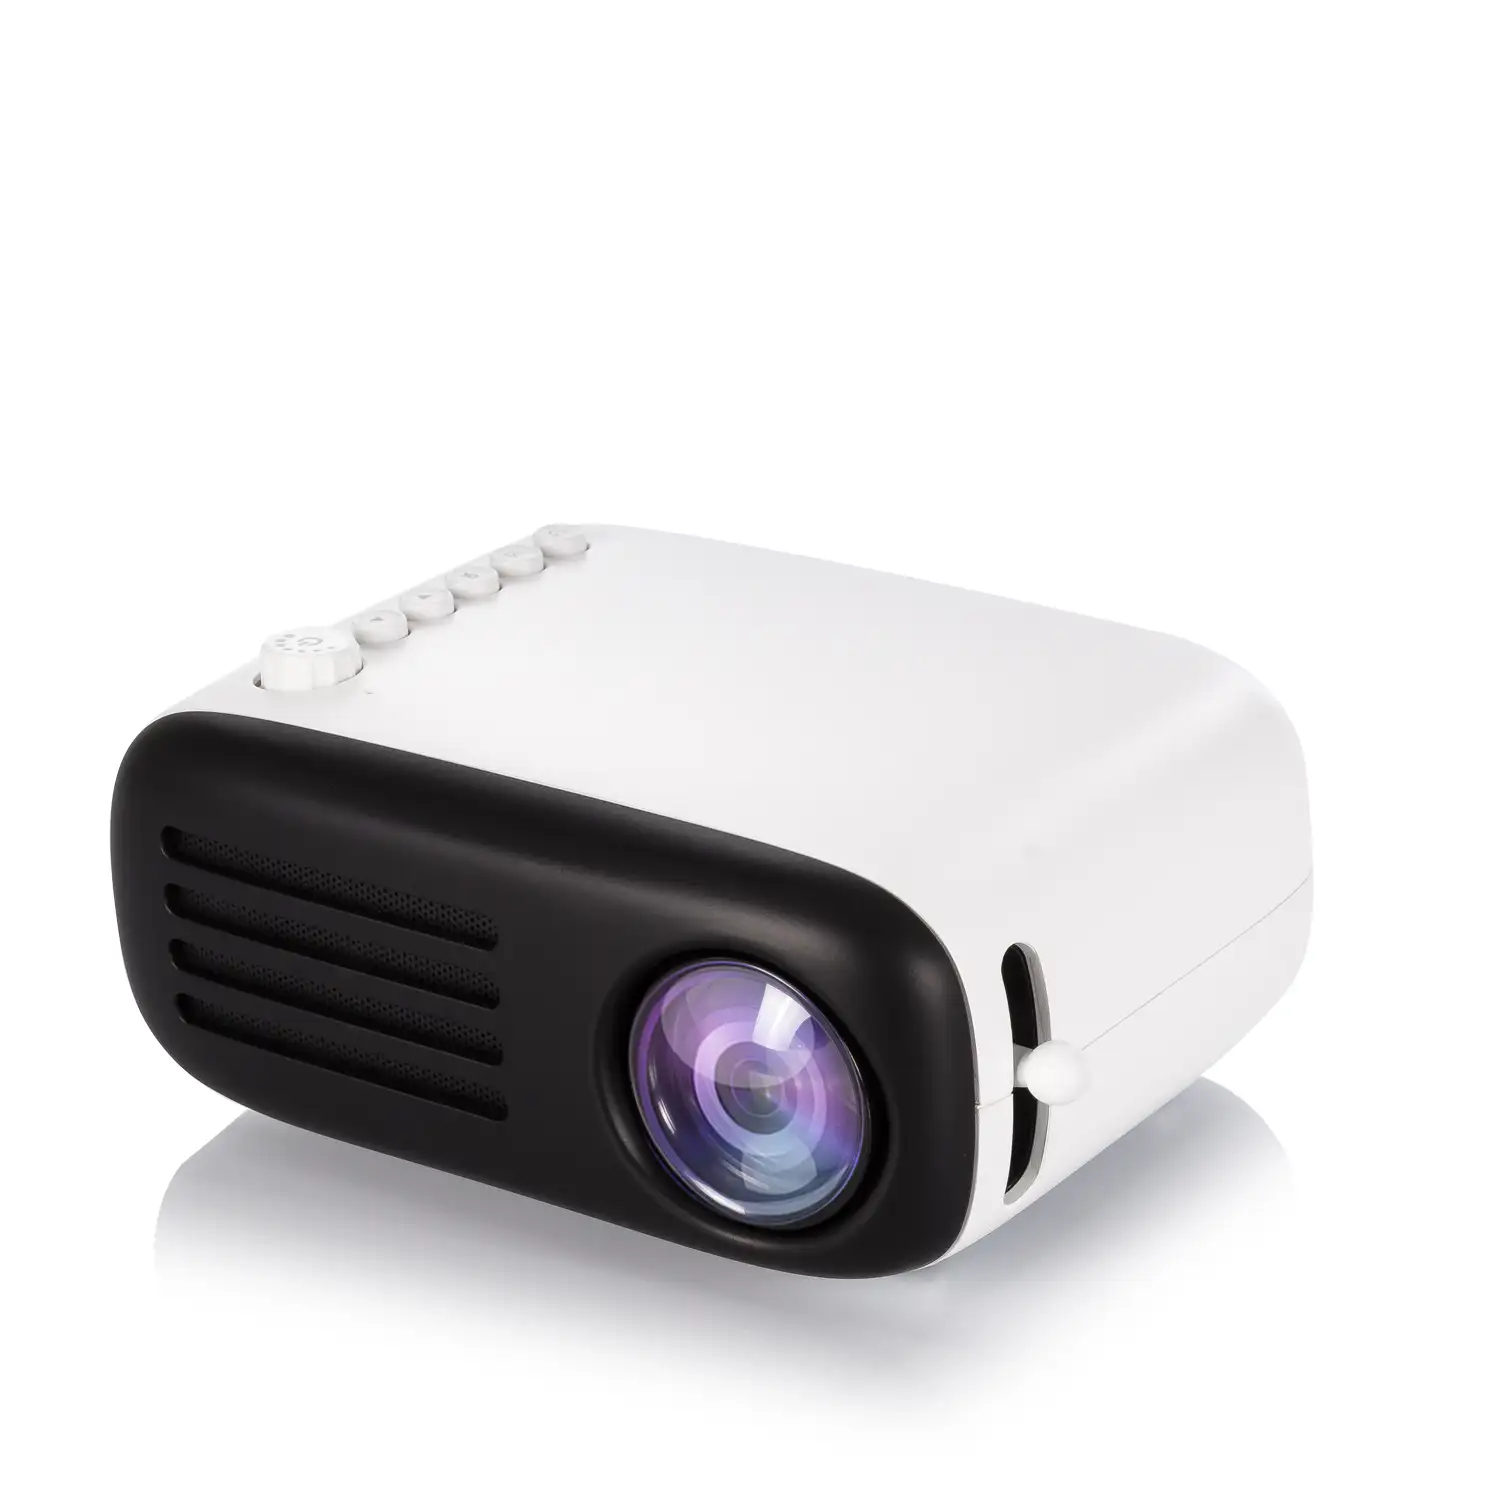 Mini video proyector YG200 LED 600 lúmenes, contraste 800:1. De 24 a 60 pulgadas. Soporta resolución HD1080P. Mando a distancia.